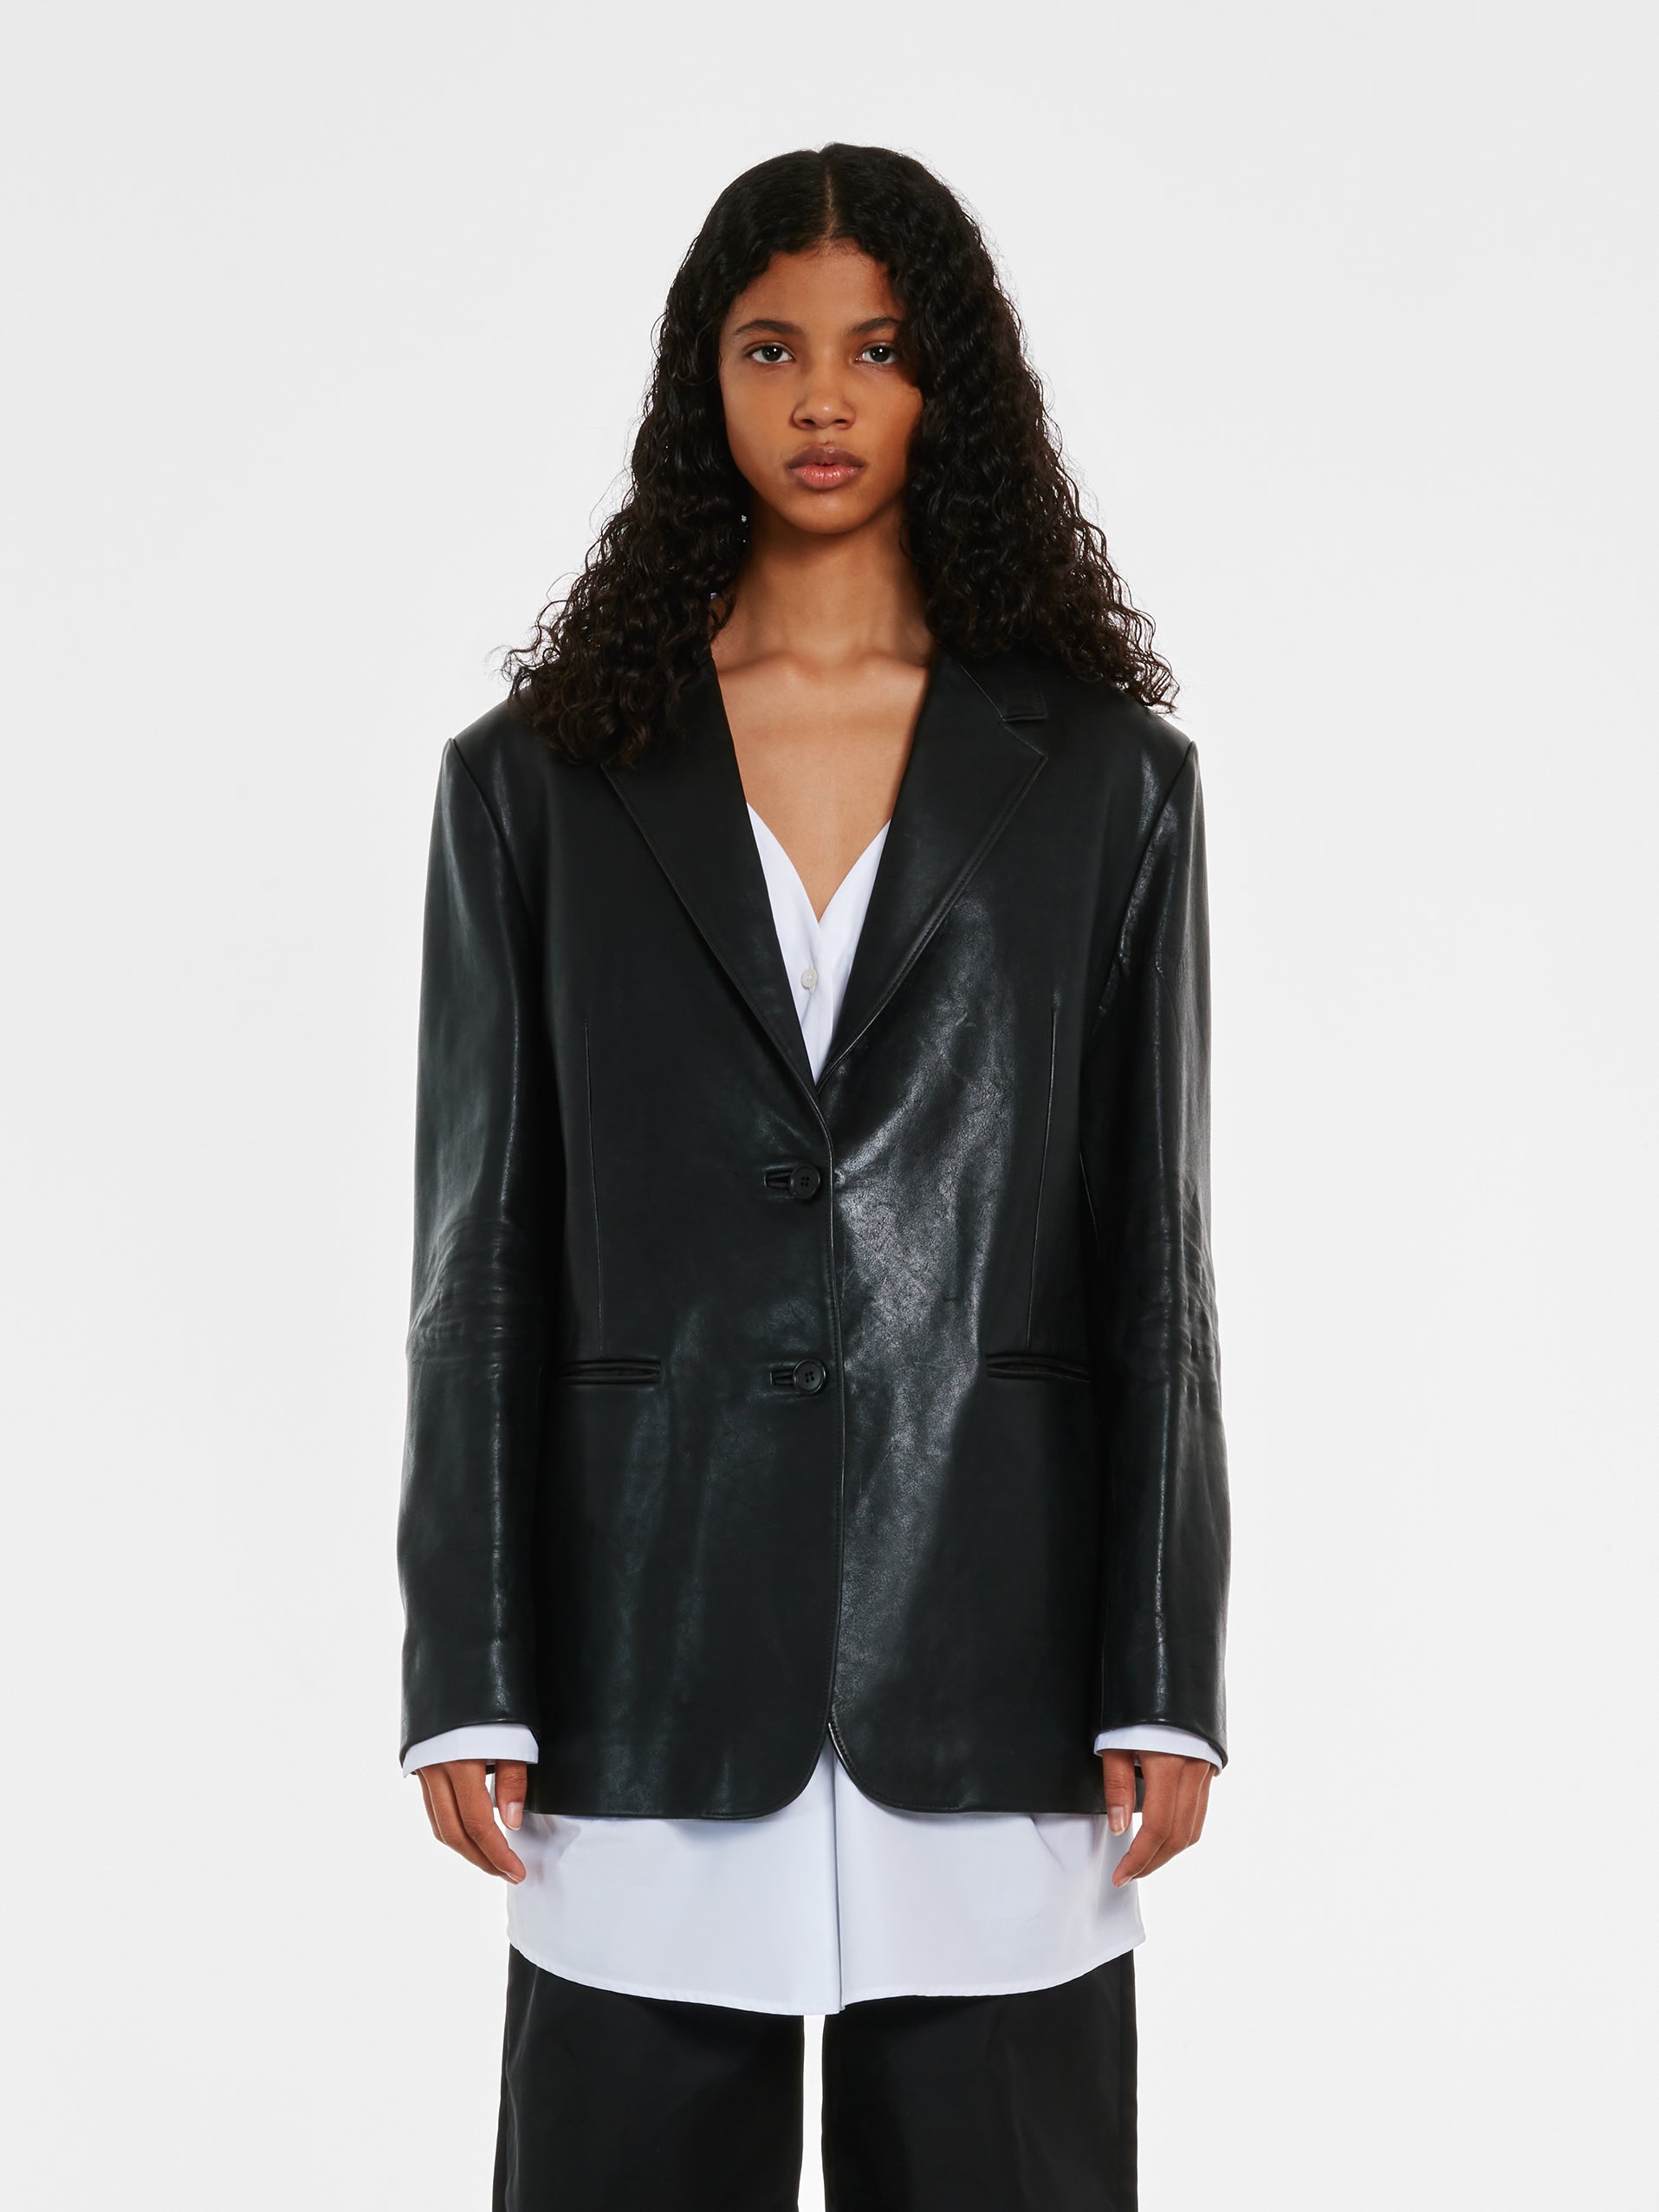 Prada - Women’s Leather Jacket - (Black) view 1